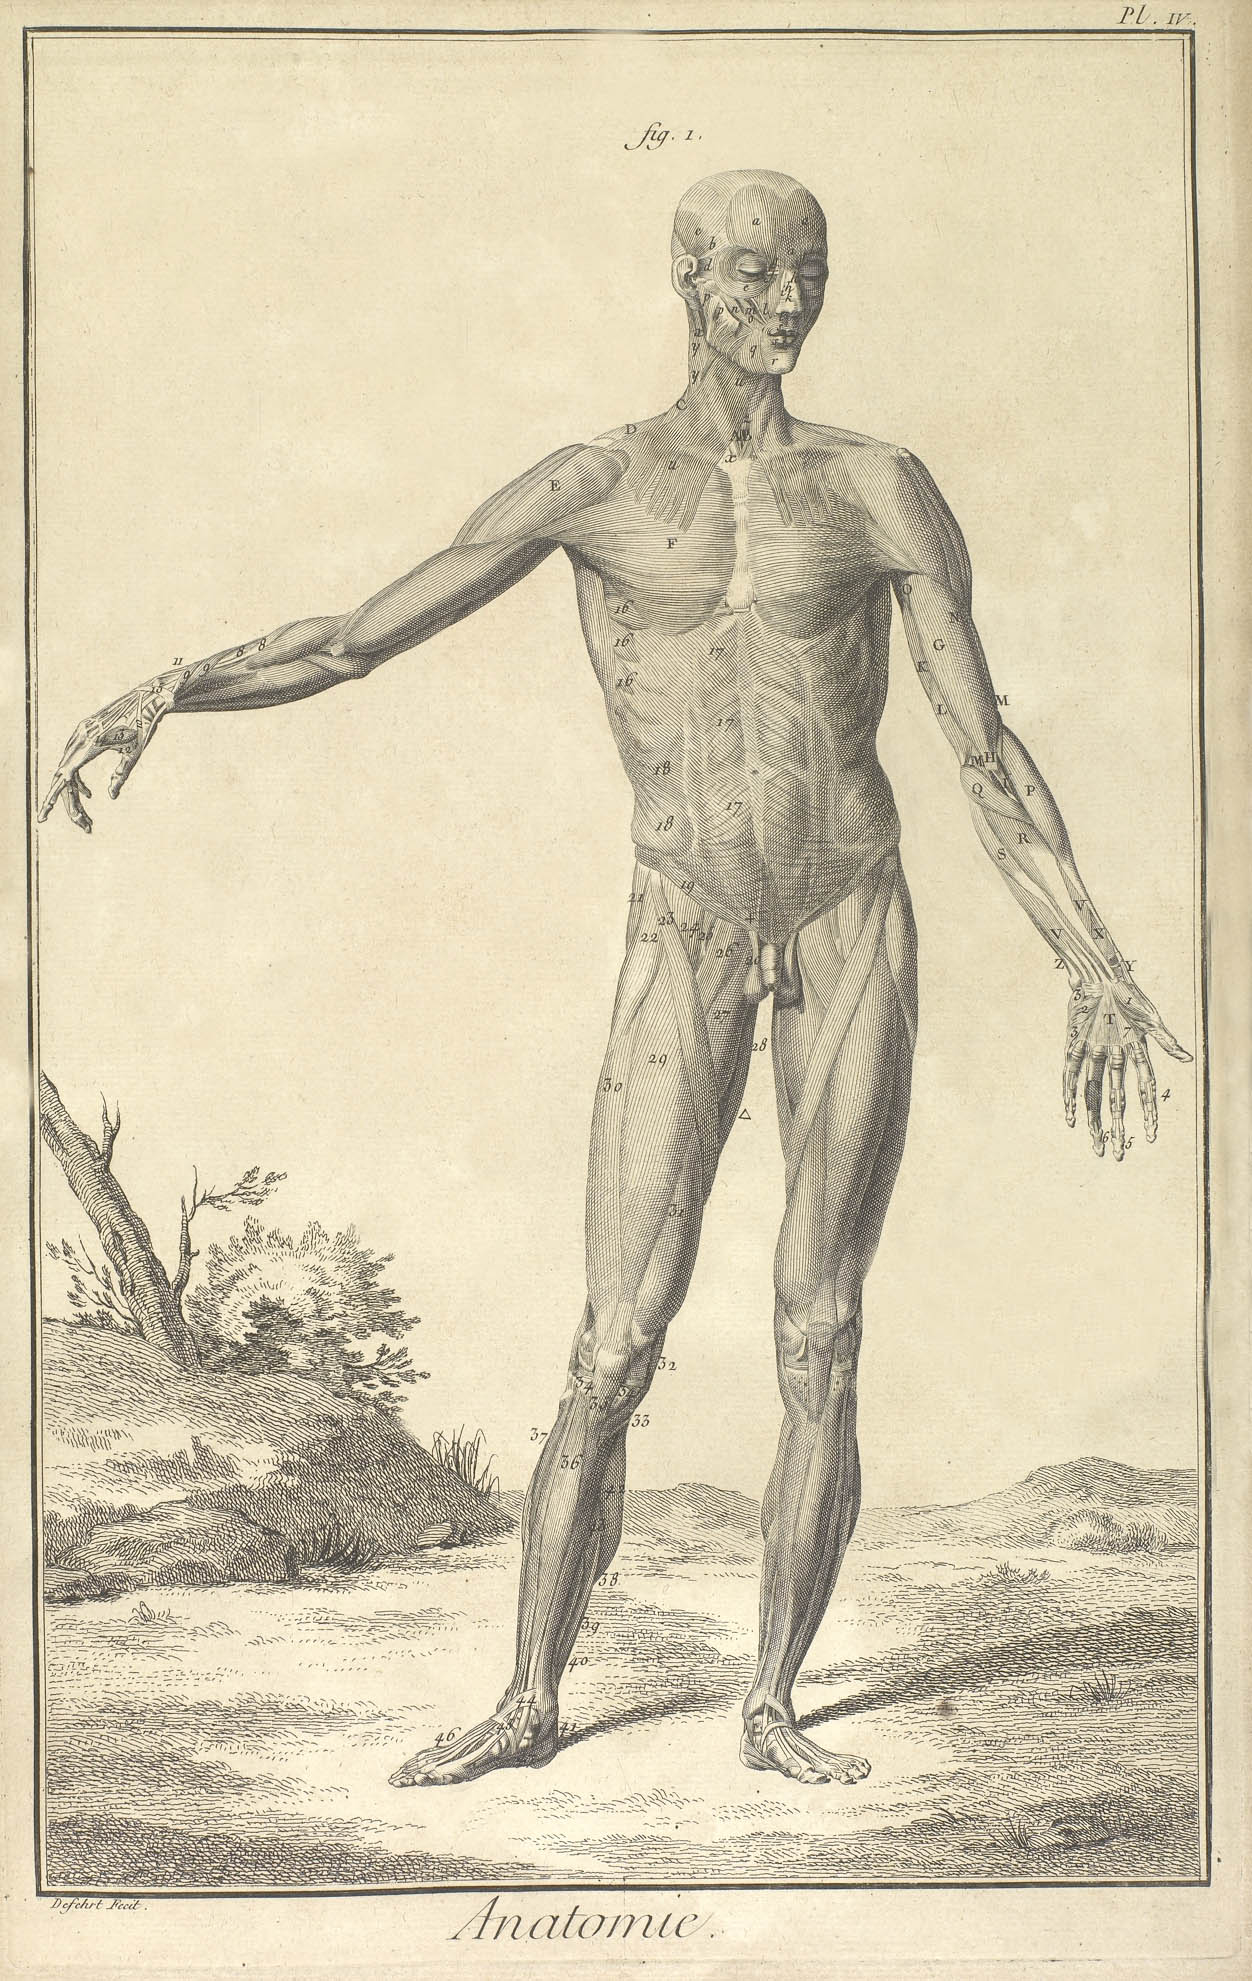 Anatomia muscular humana. Em: Denis Diderot; Jean-Baptiste Lerond d'Alembert. Encyclopédie... Paris: Briasson, 1751-1780. Vol. 1, 2ª. parte, pl. 4. OR 1896